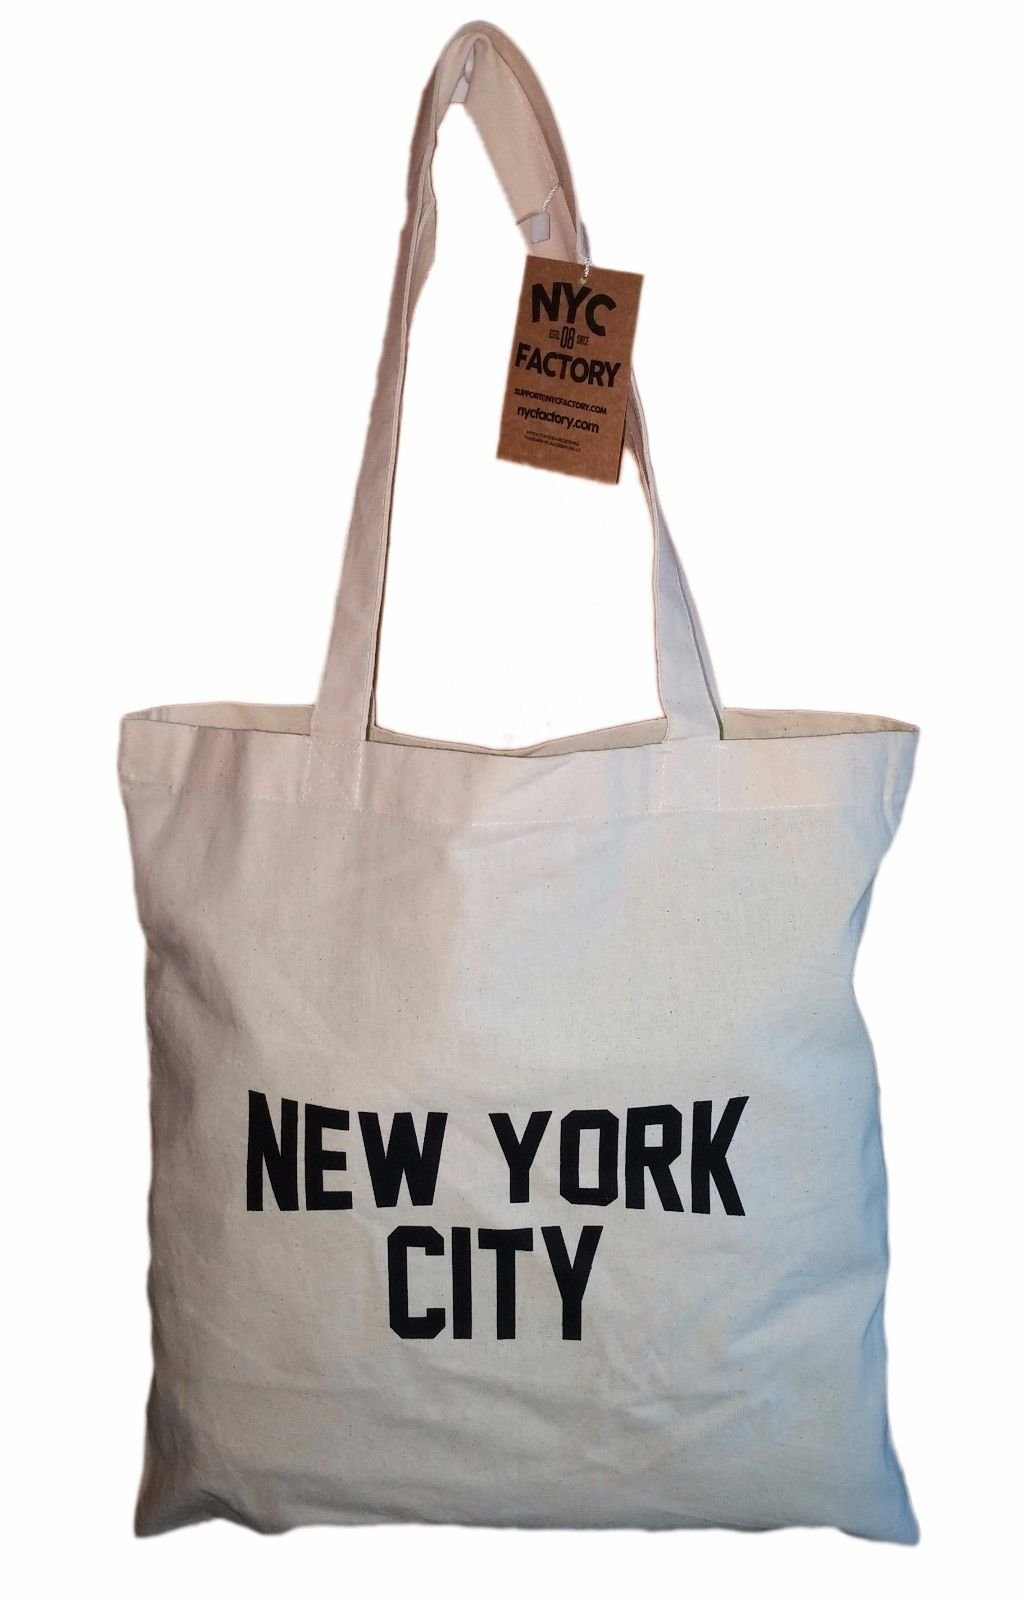 NYC Tote Bag New York City 100% Cotton Canvas Screenprinted | eBay